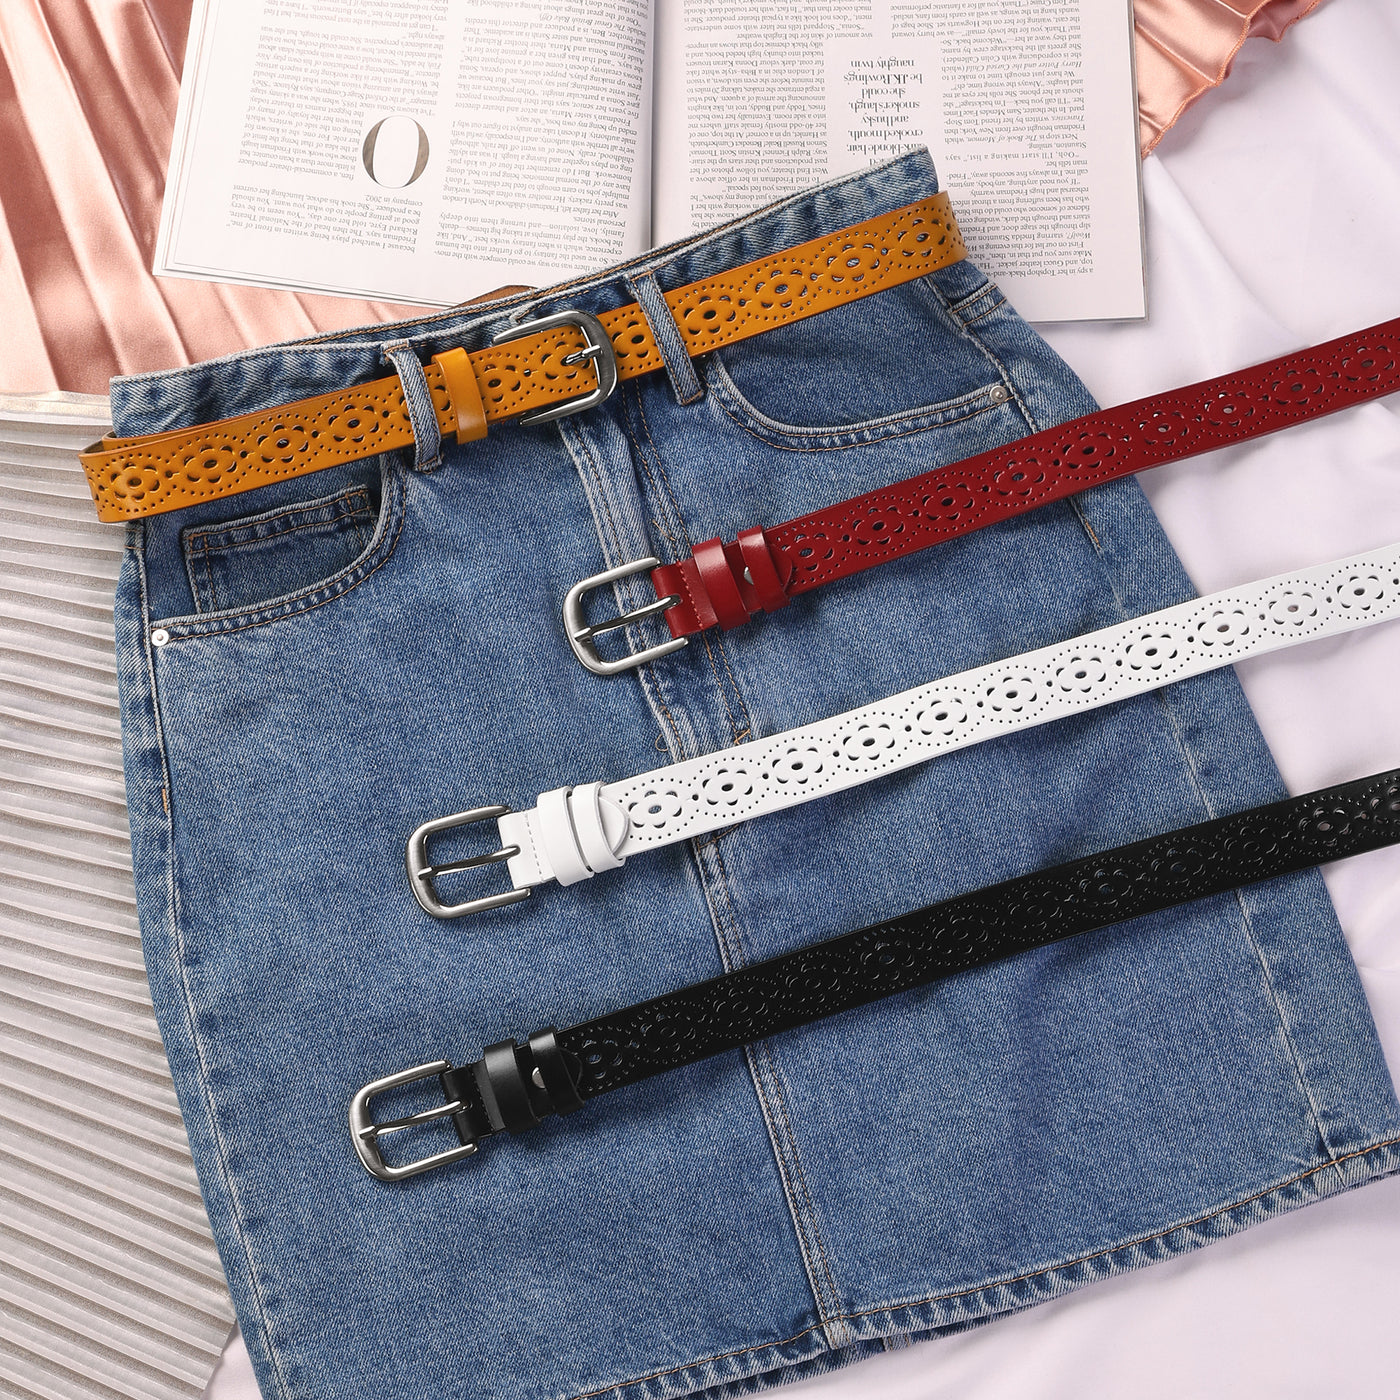 Allegra K Womens Vintage Hollow Belts Pin Buckle Faux Leather Belts for Jeans Pants